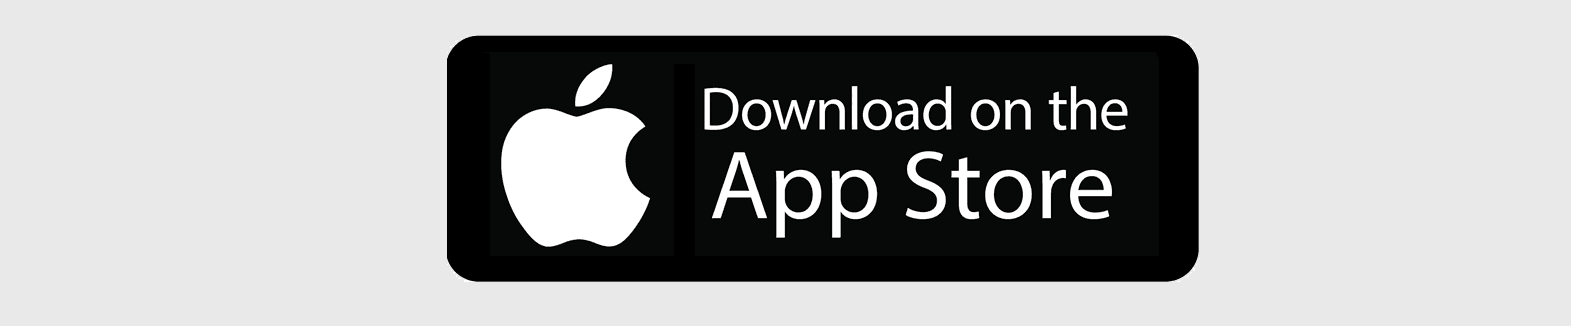 App Store Button 1